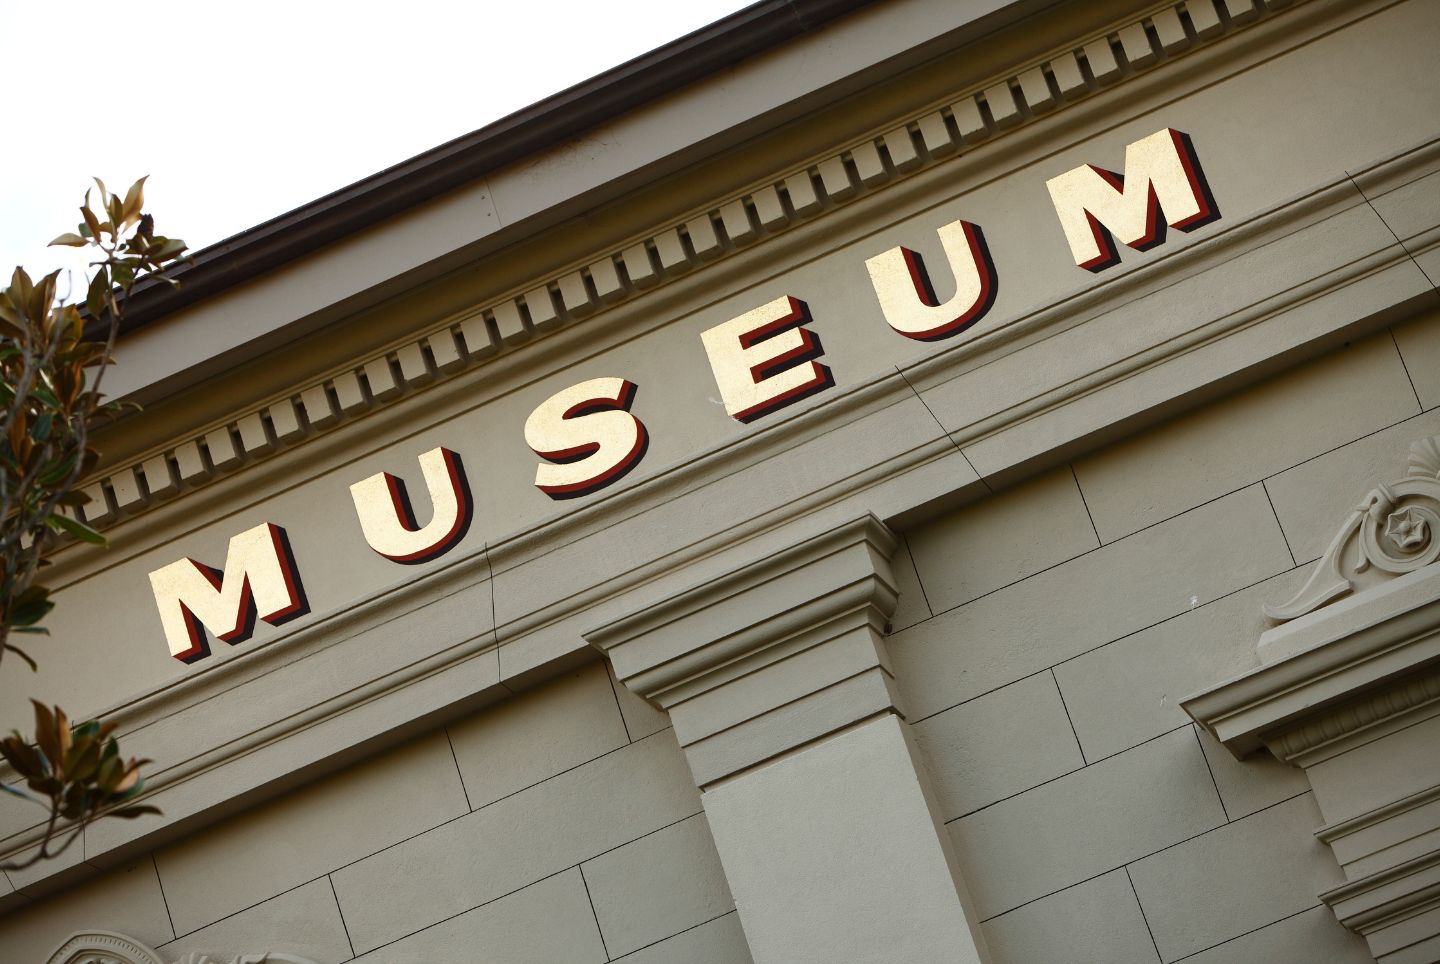 Gratis museum i Stockholm – Utforska kulturen kostnadsfritt